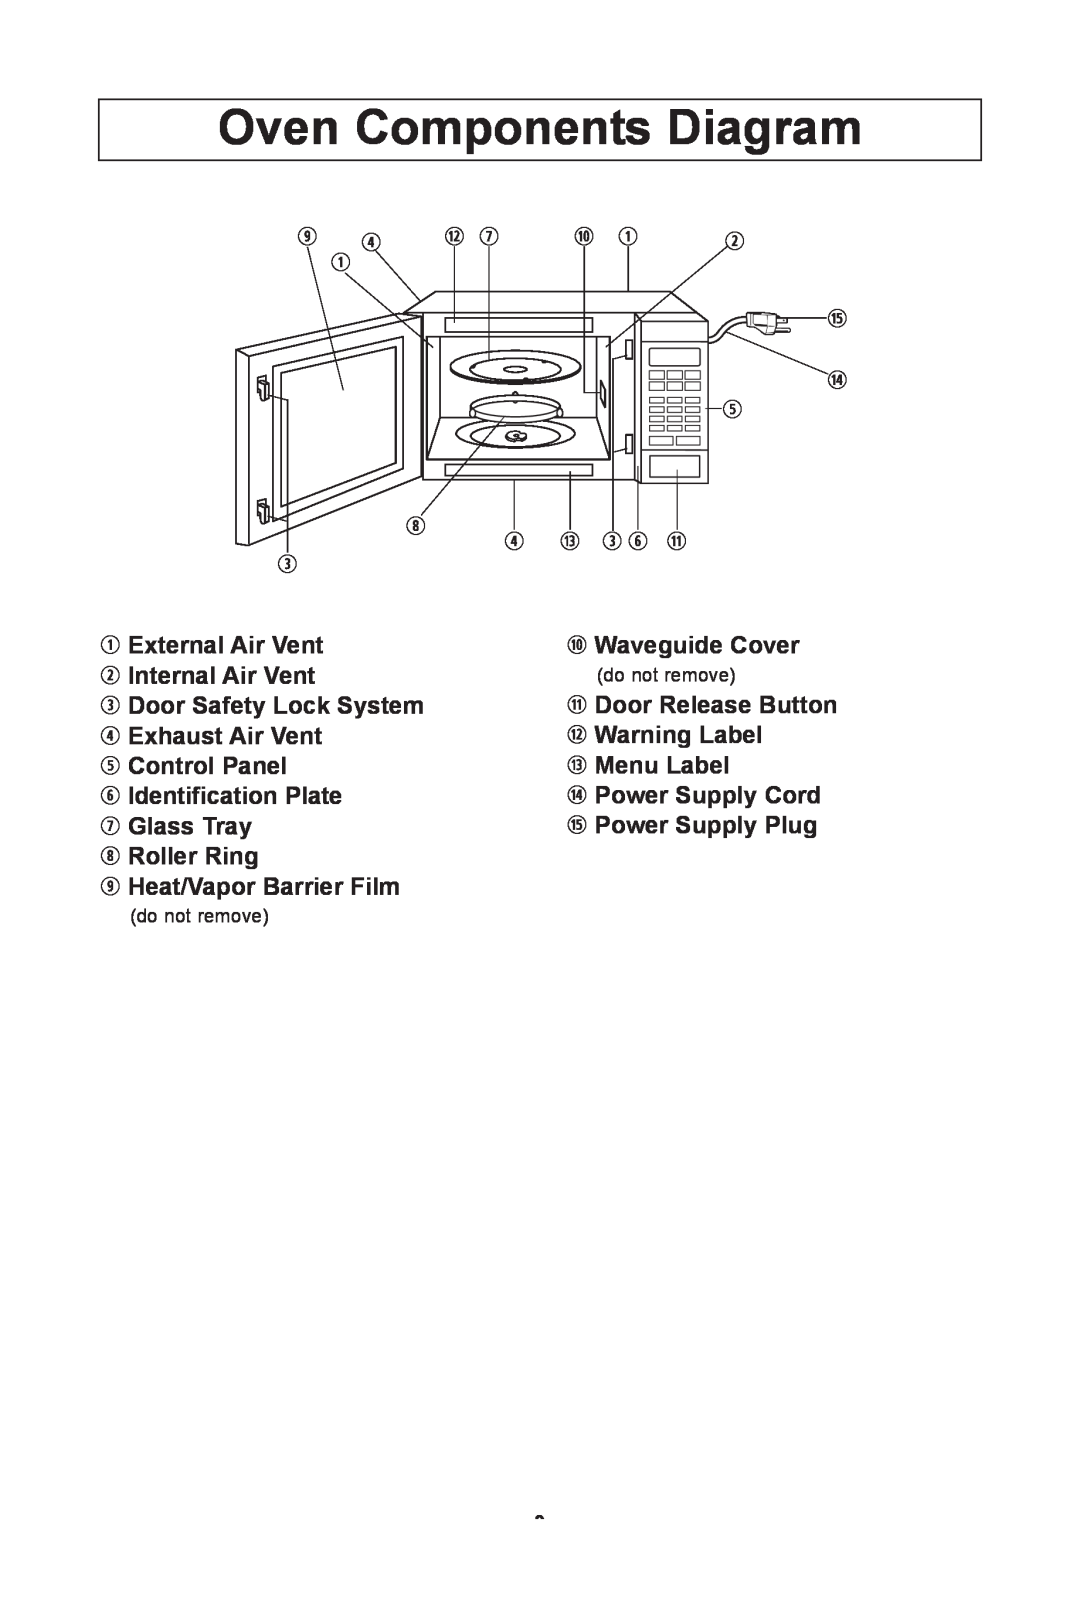 Panasonic NN SN661S, NN SN671S oven components diagram, q external air vent w internal air vent, o heat/vapor barrier film 